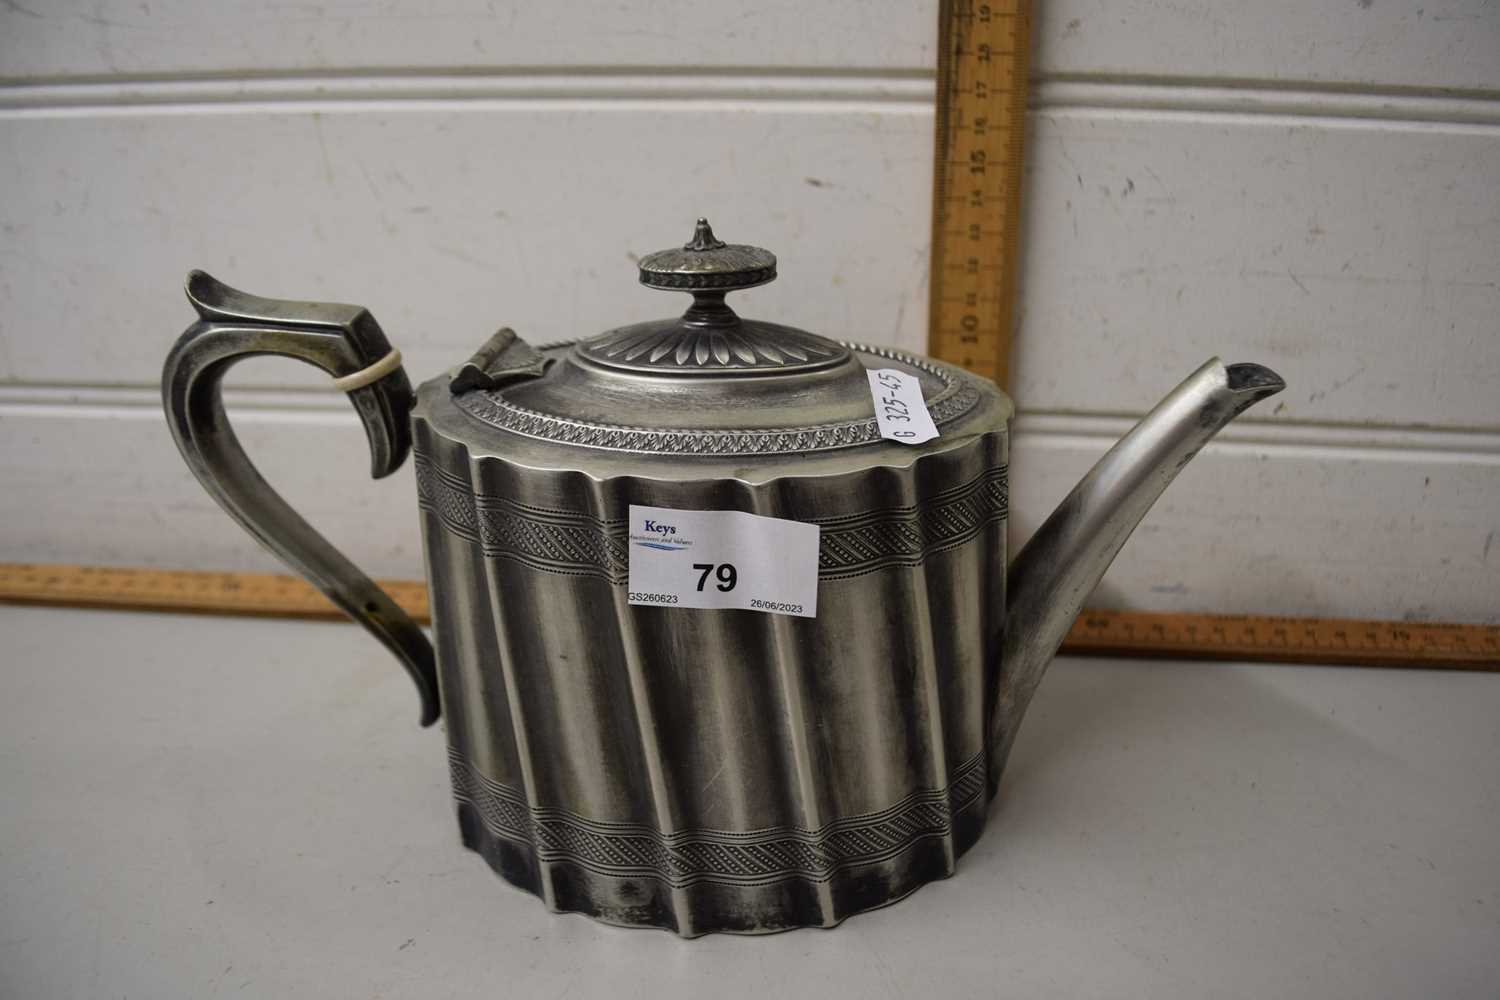 An EPBM teapot